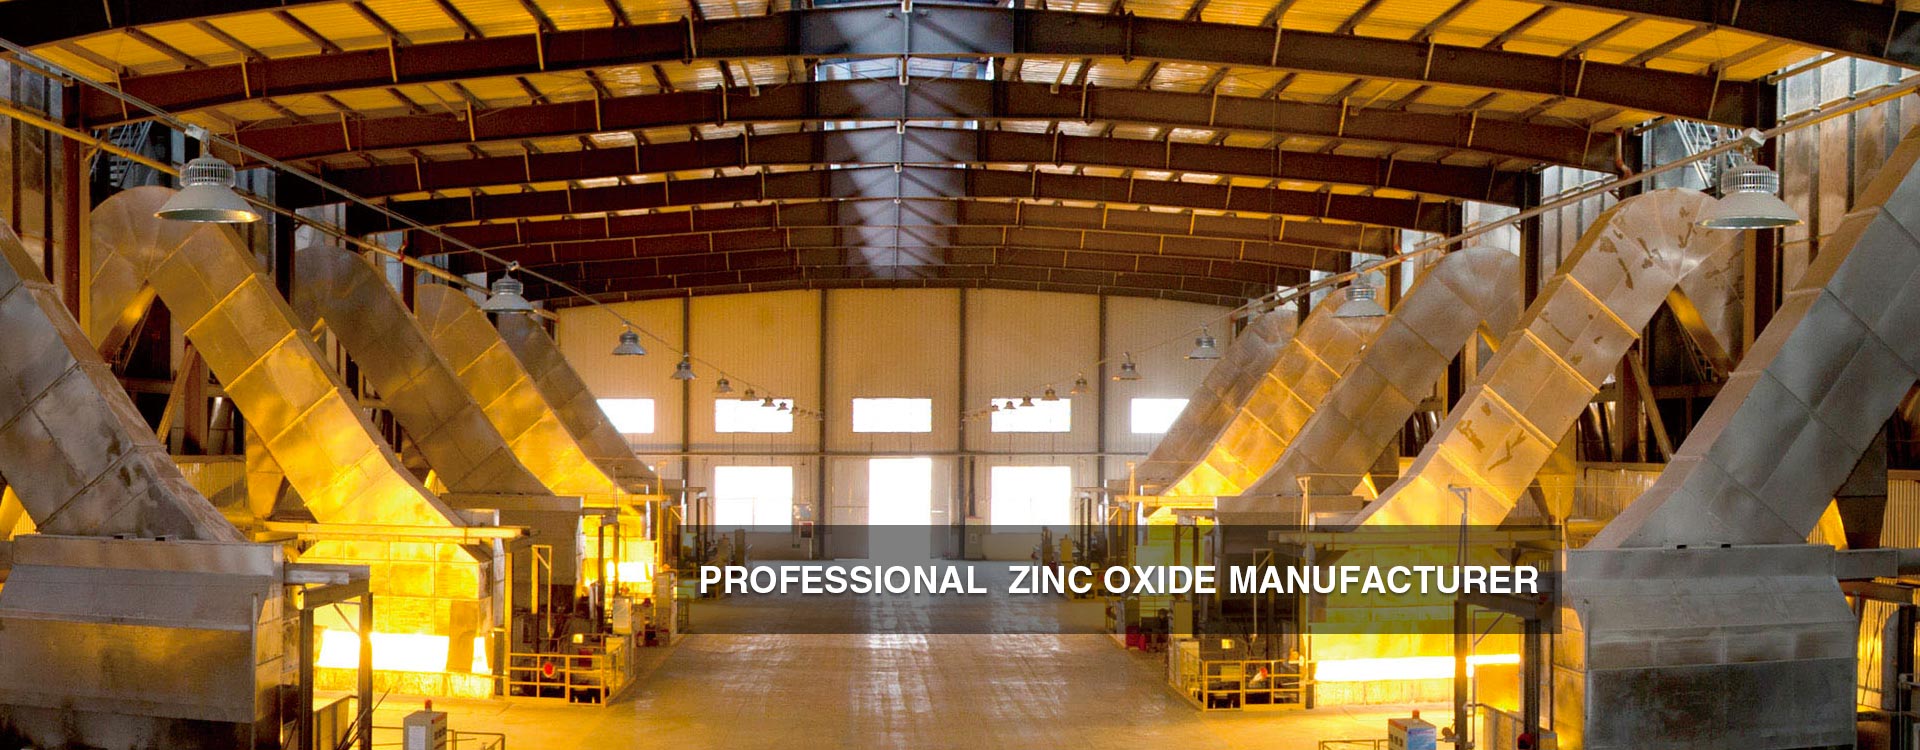 Zinc Oxide Manufacturer